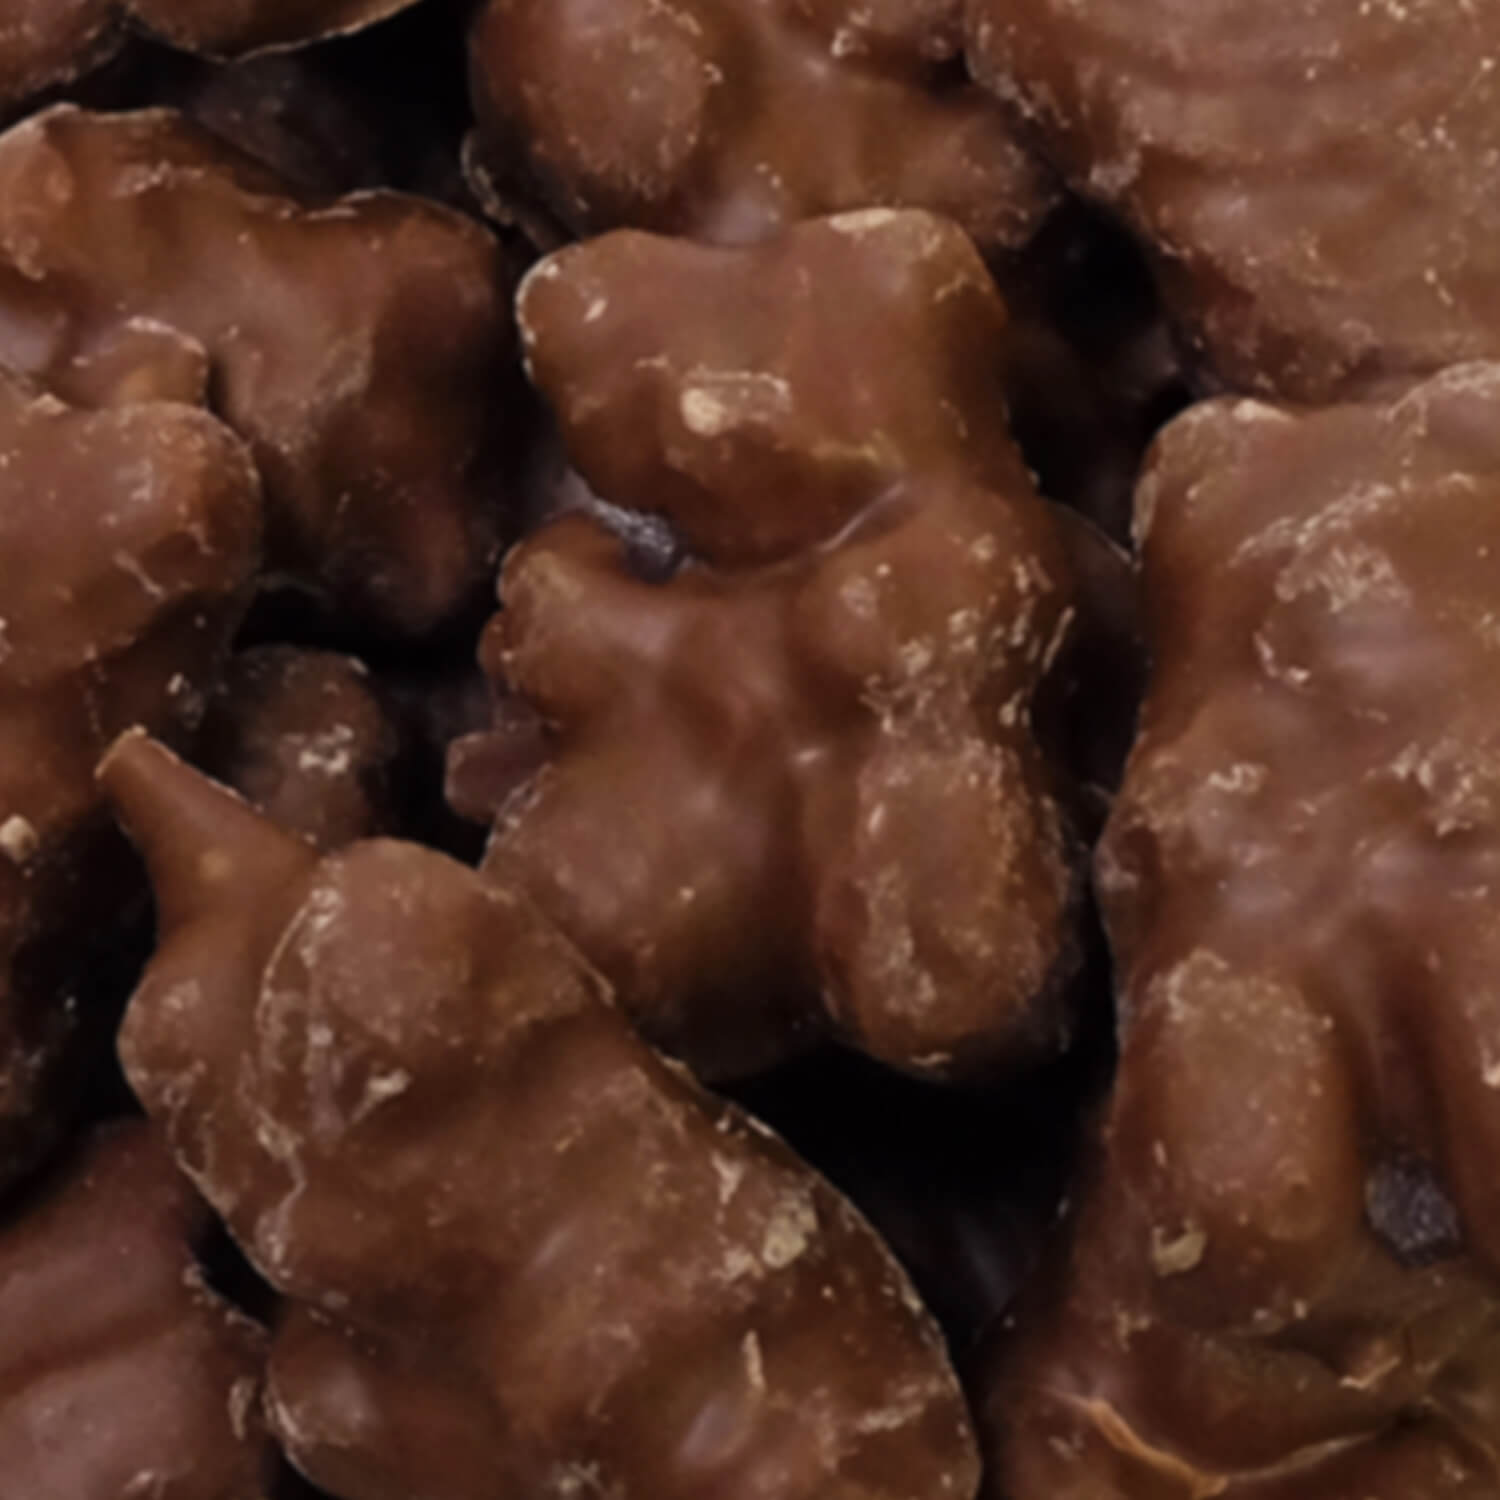 Milk chocolate gummy bears